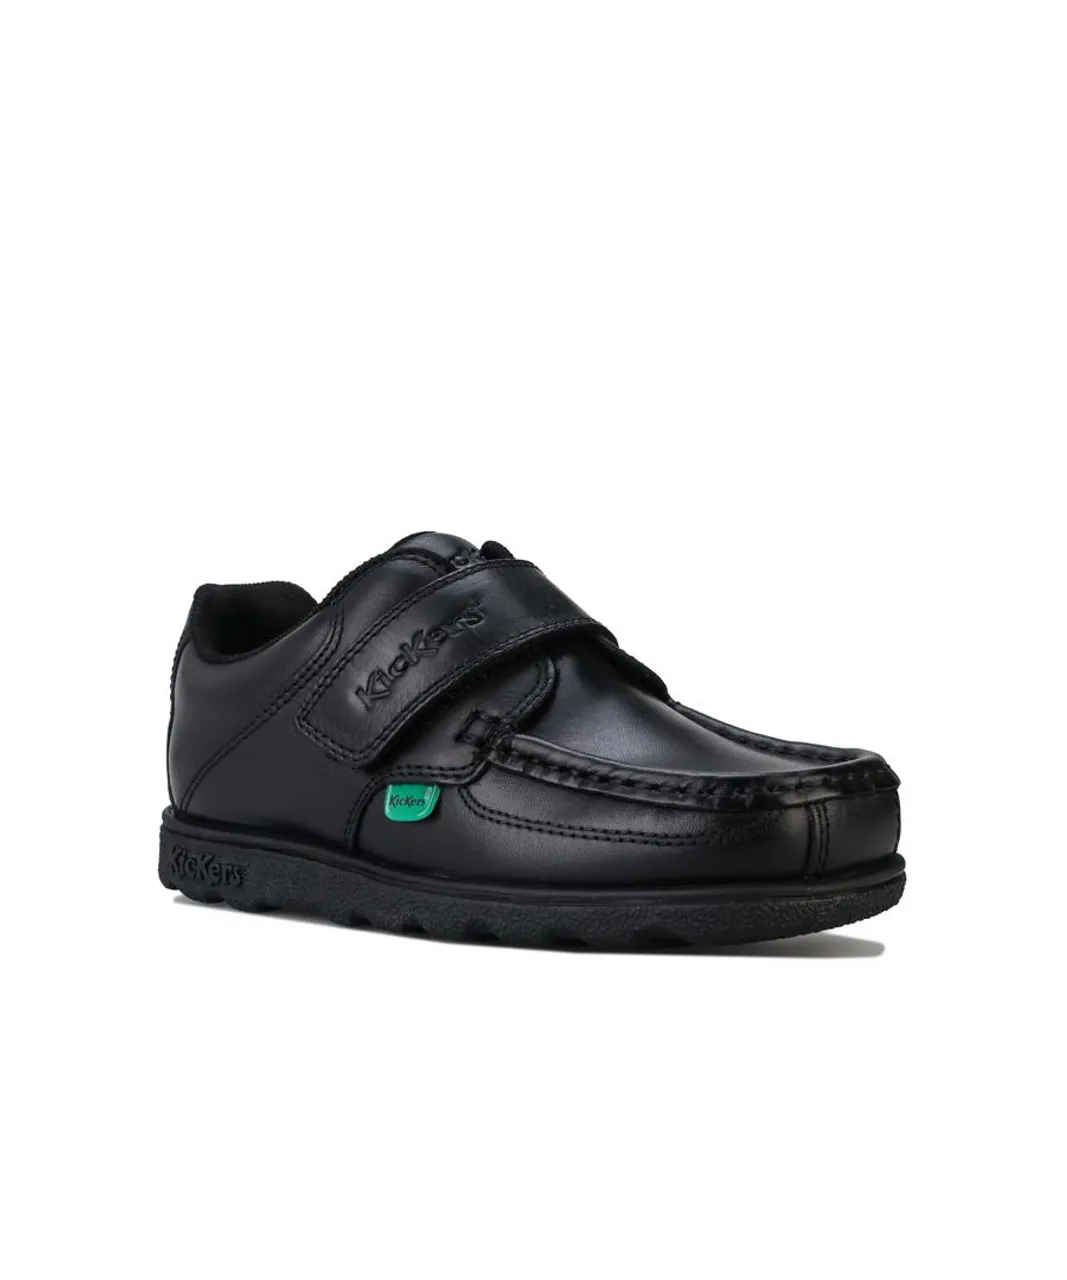 Kickers Boys Boy's Children Fragma Lo Strap Leather Shoe in Black